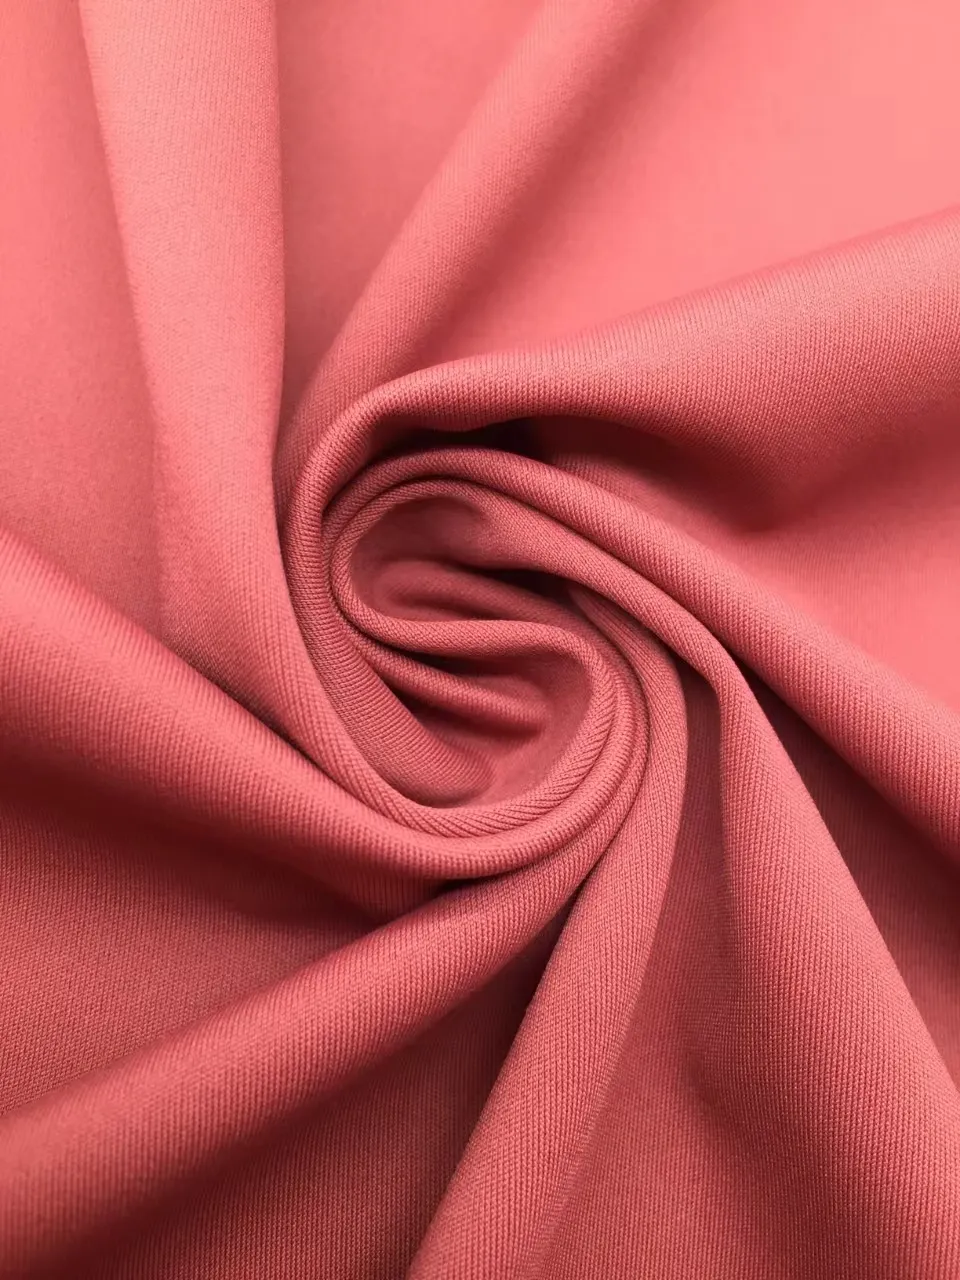 Good Quality High Elastic 26% Spandex 74% Nylon 300g Multi Color Select for Yoga Wear Rib Fabric Stretch Fabric Lightweight Weft